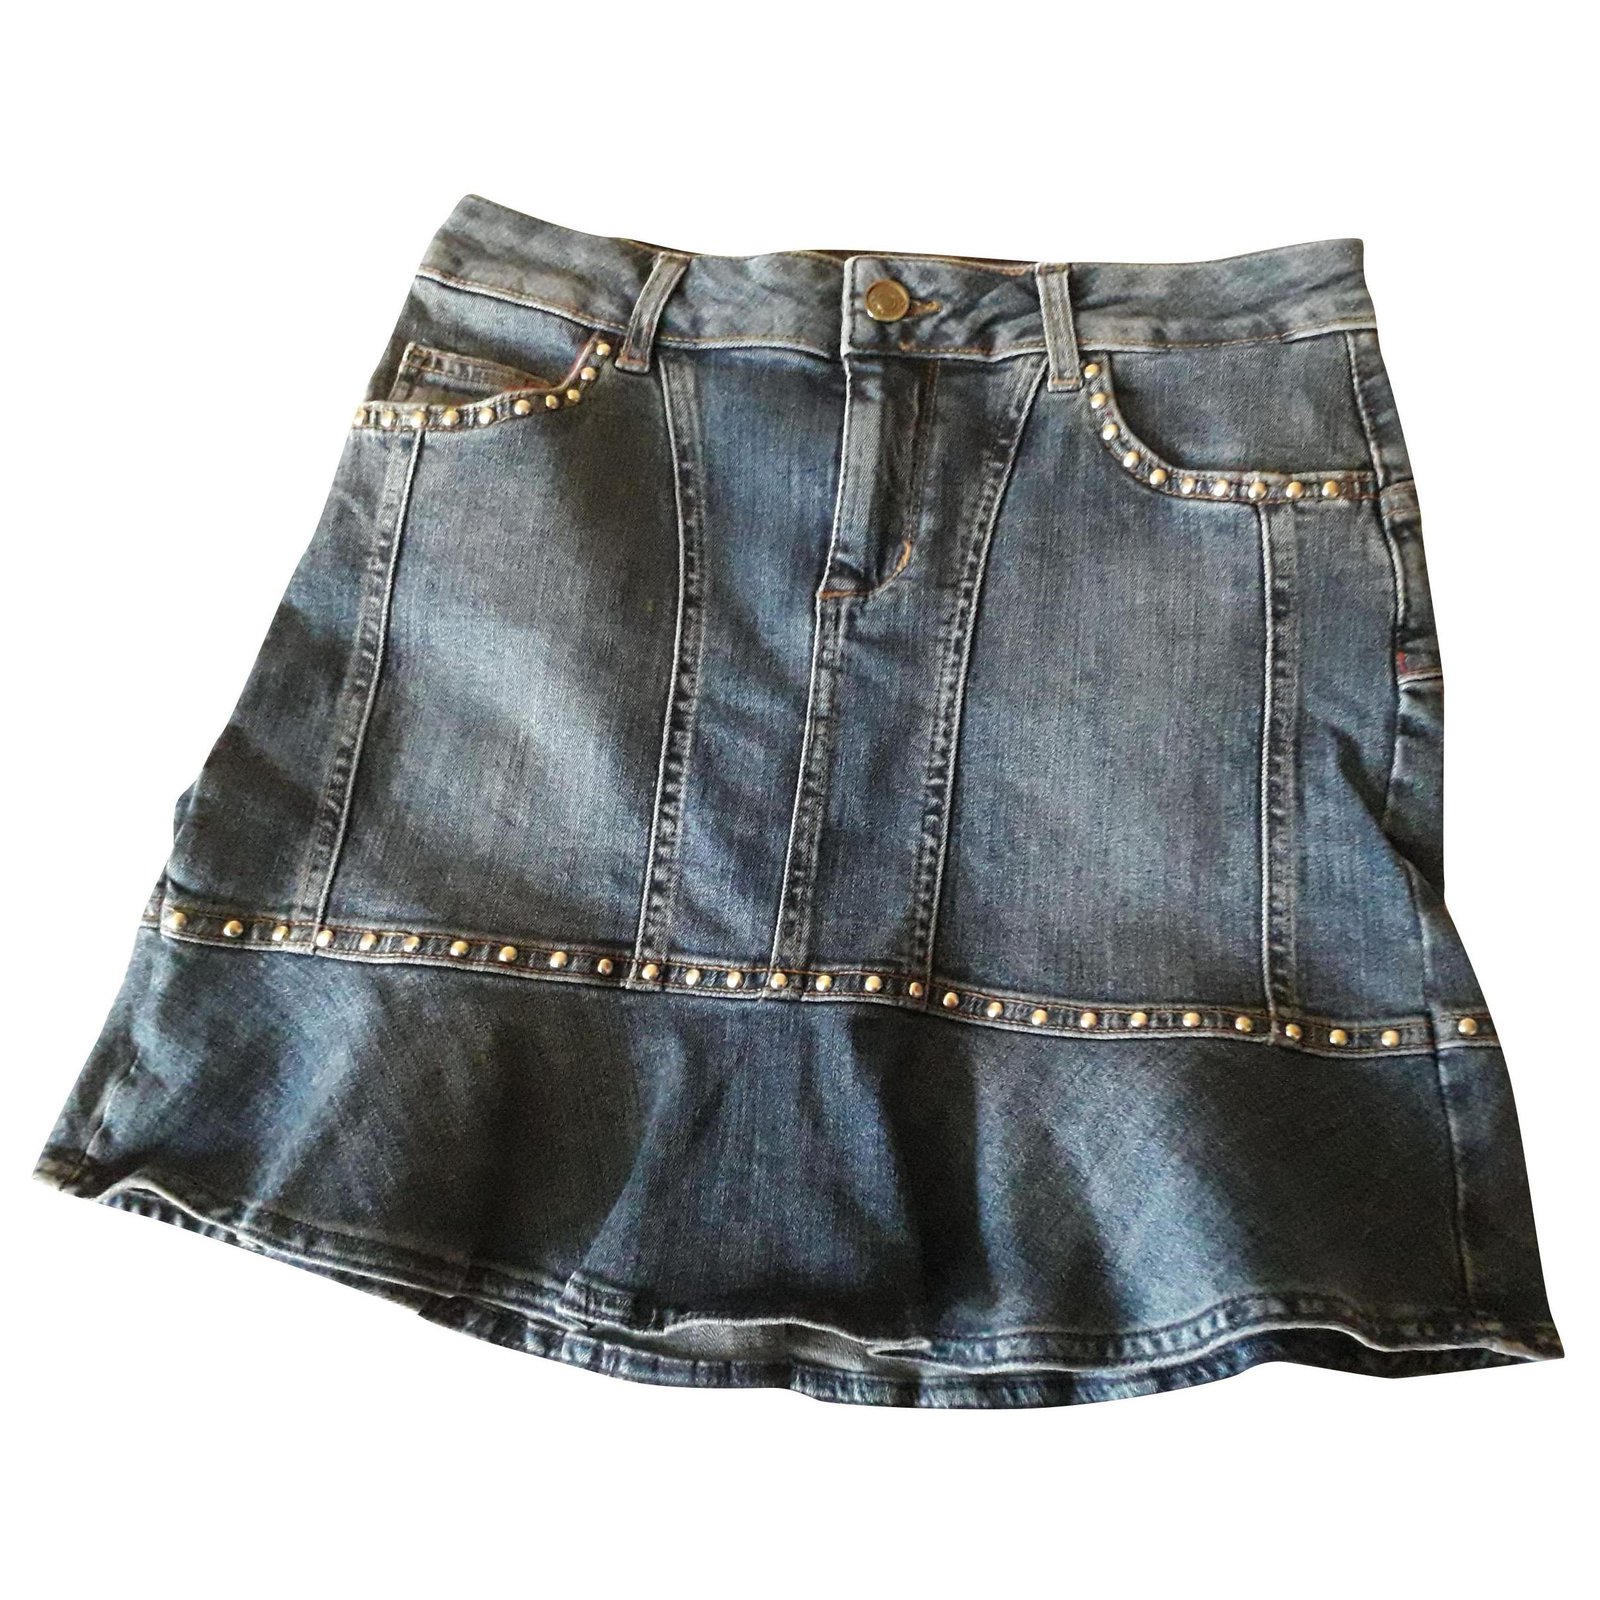 jean skirt with ruffle bottom